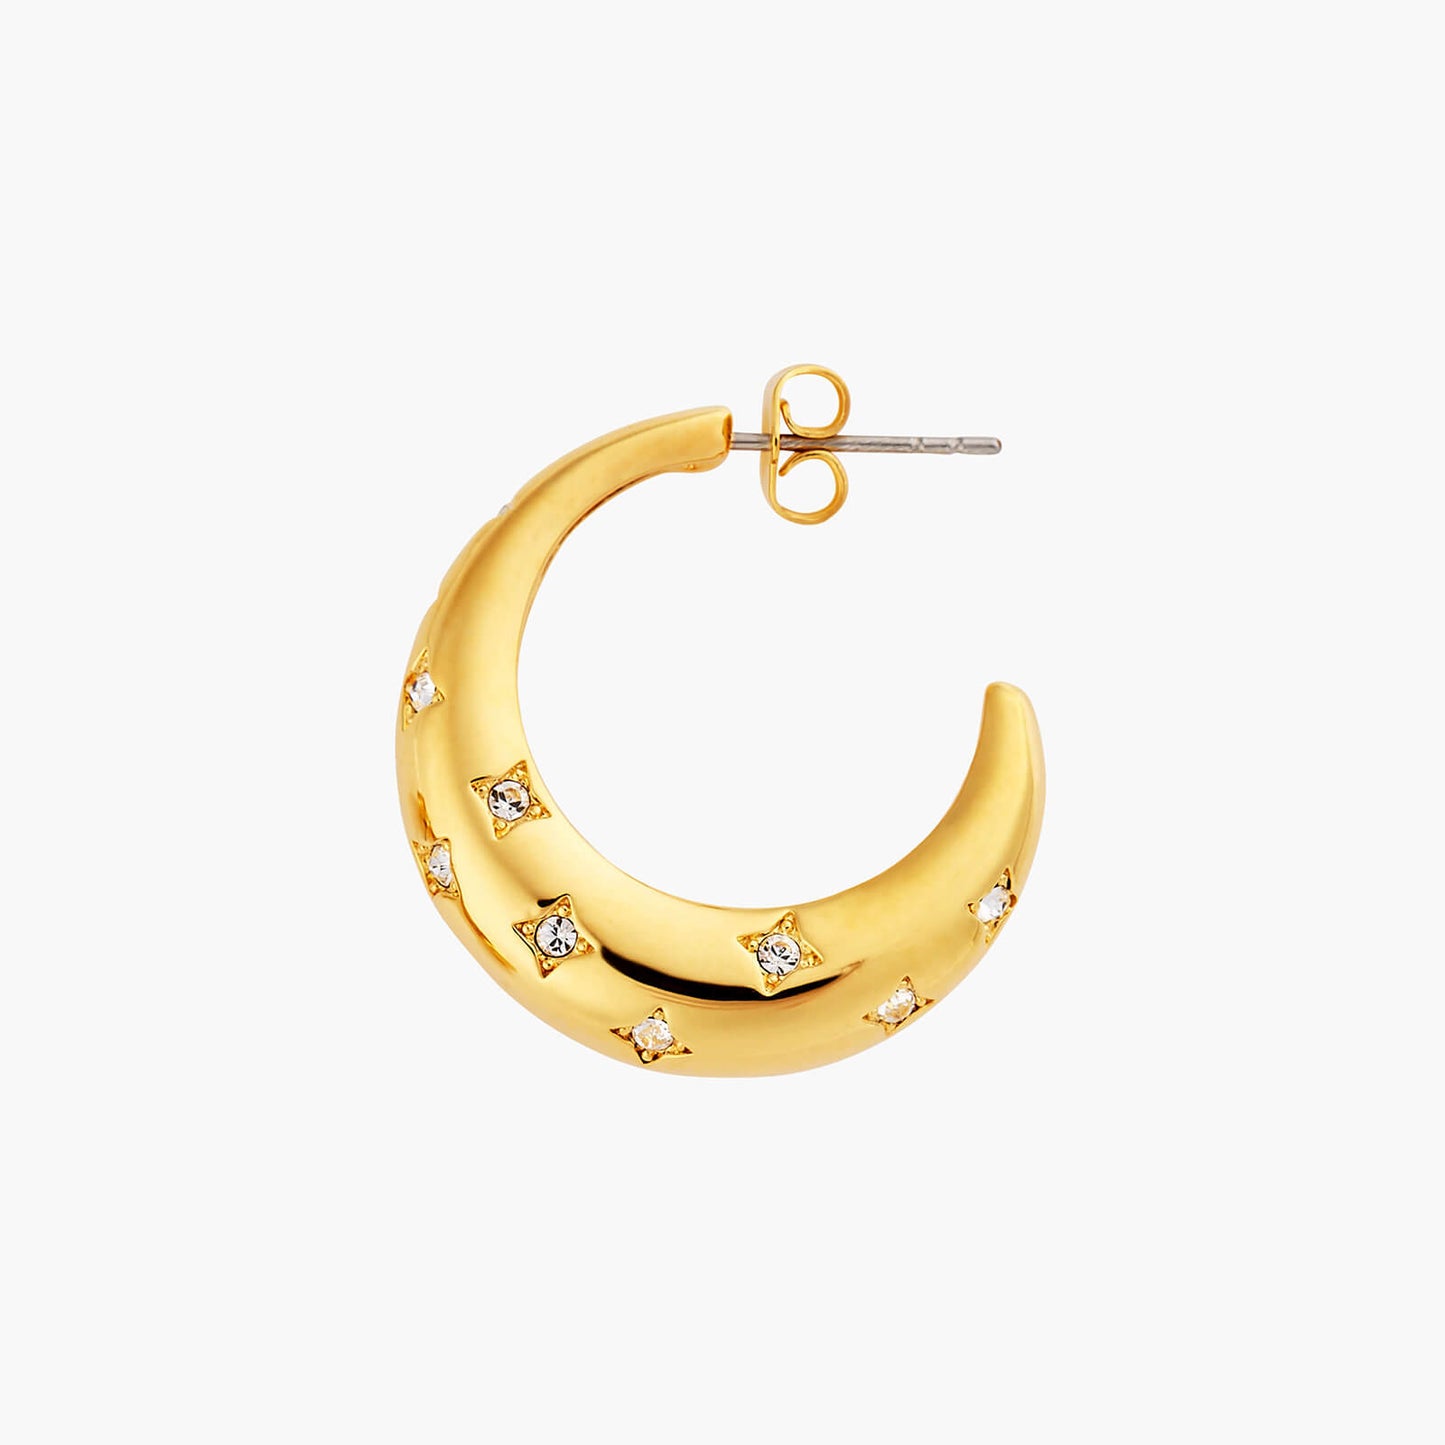 Milles Etoiles Earrings | AOMI1041